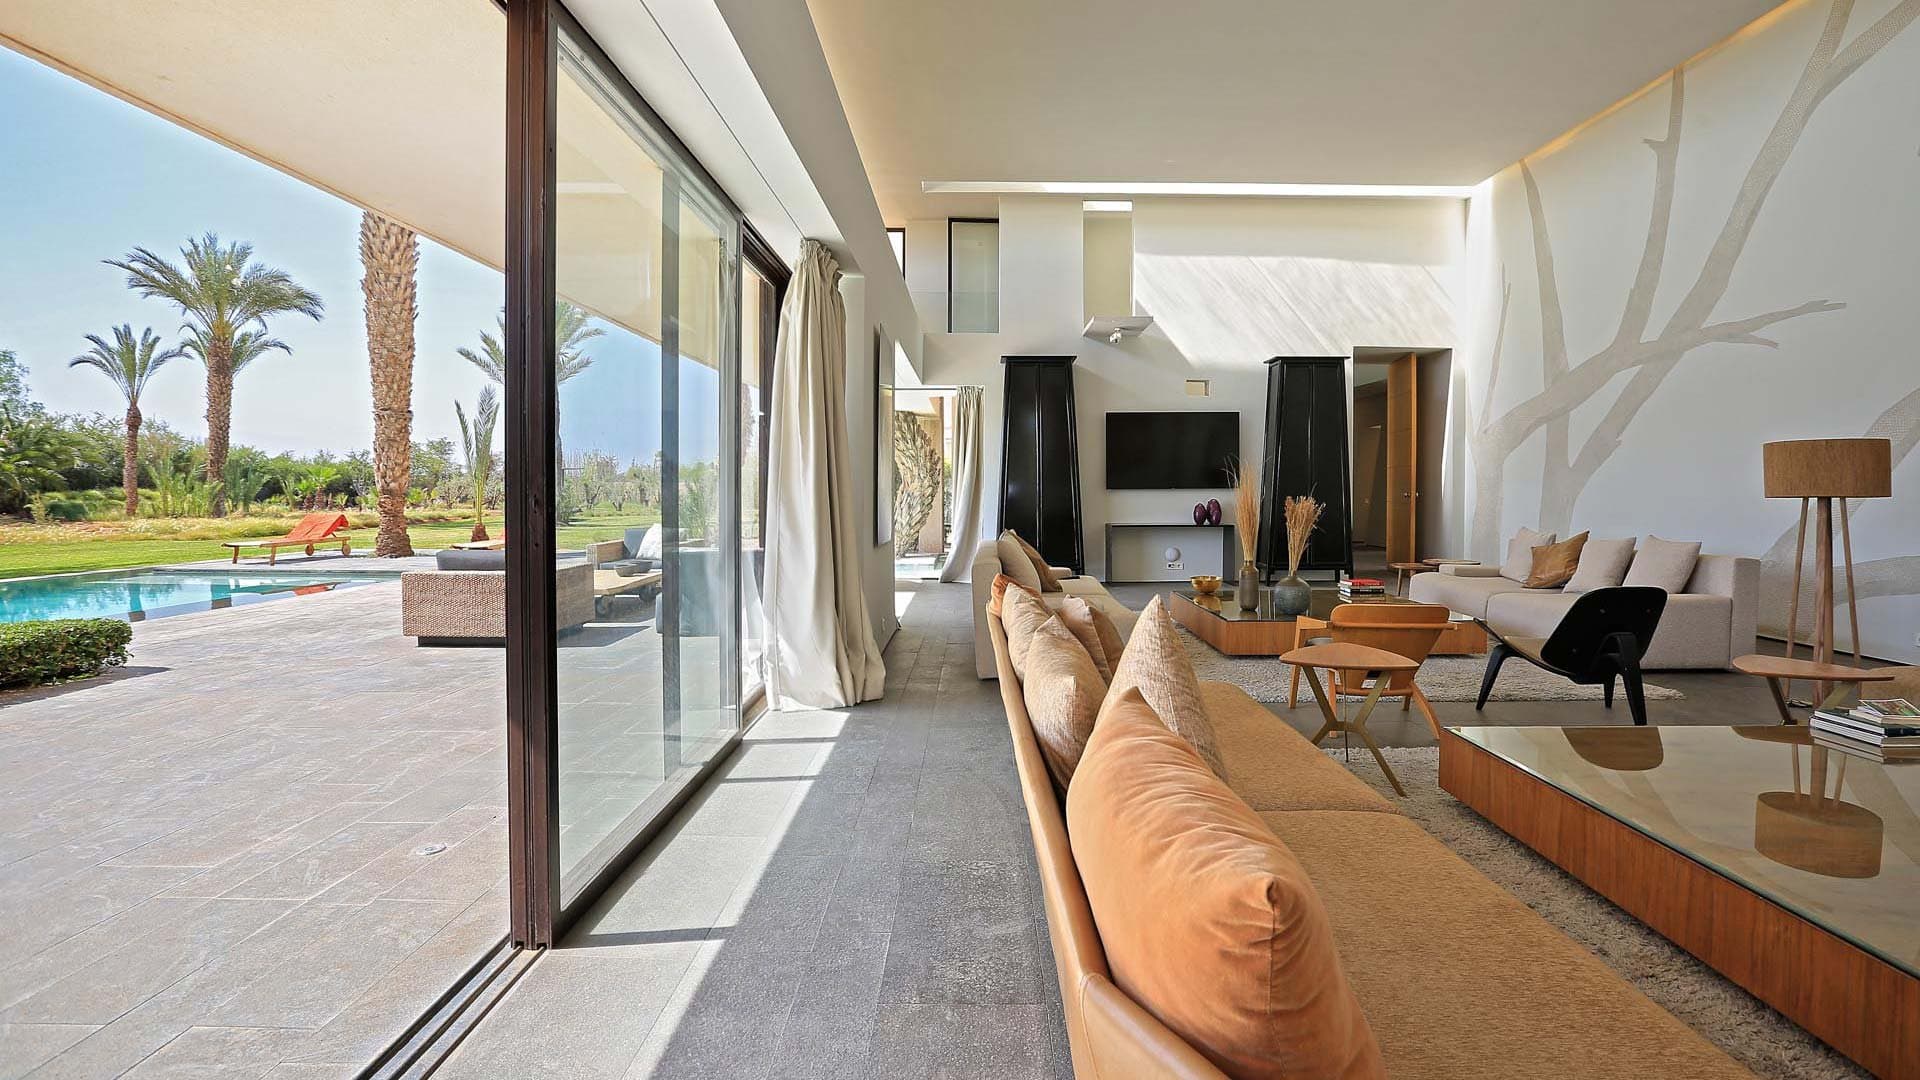 6 Bedroom Villa For Sale Marrakech Lp08713 1fc66266062ed100.jpg